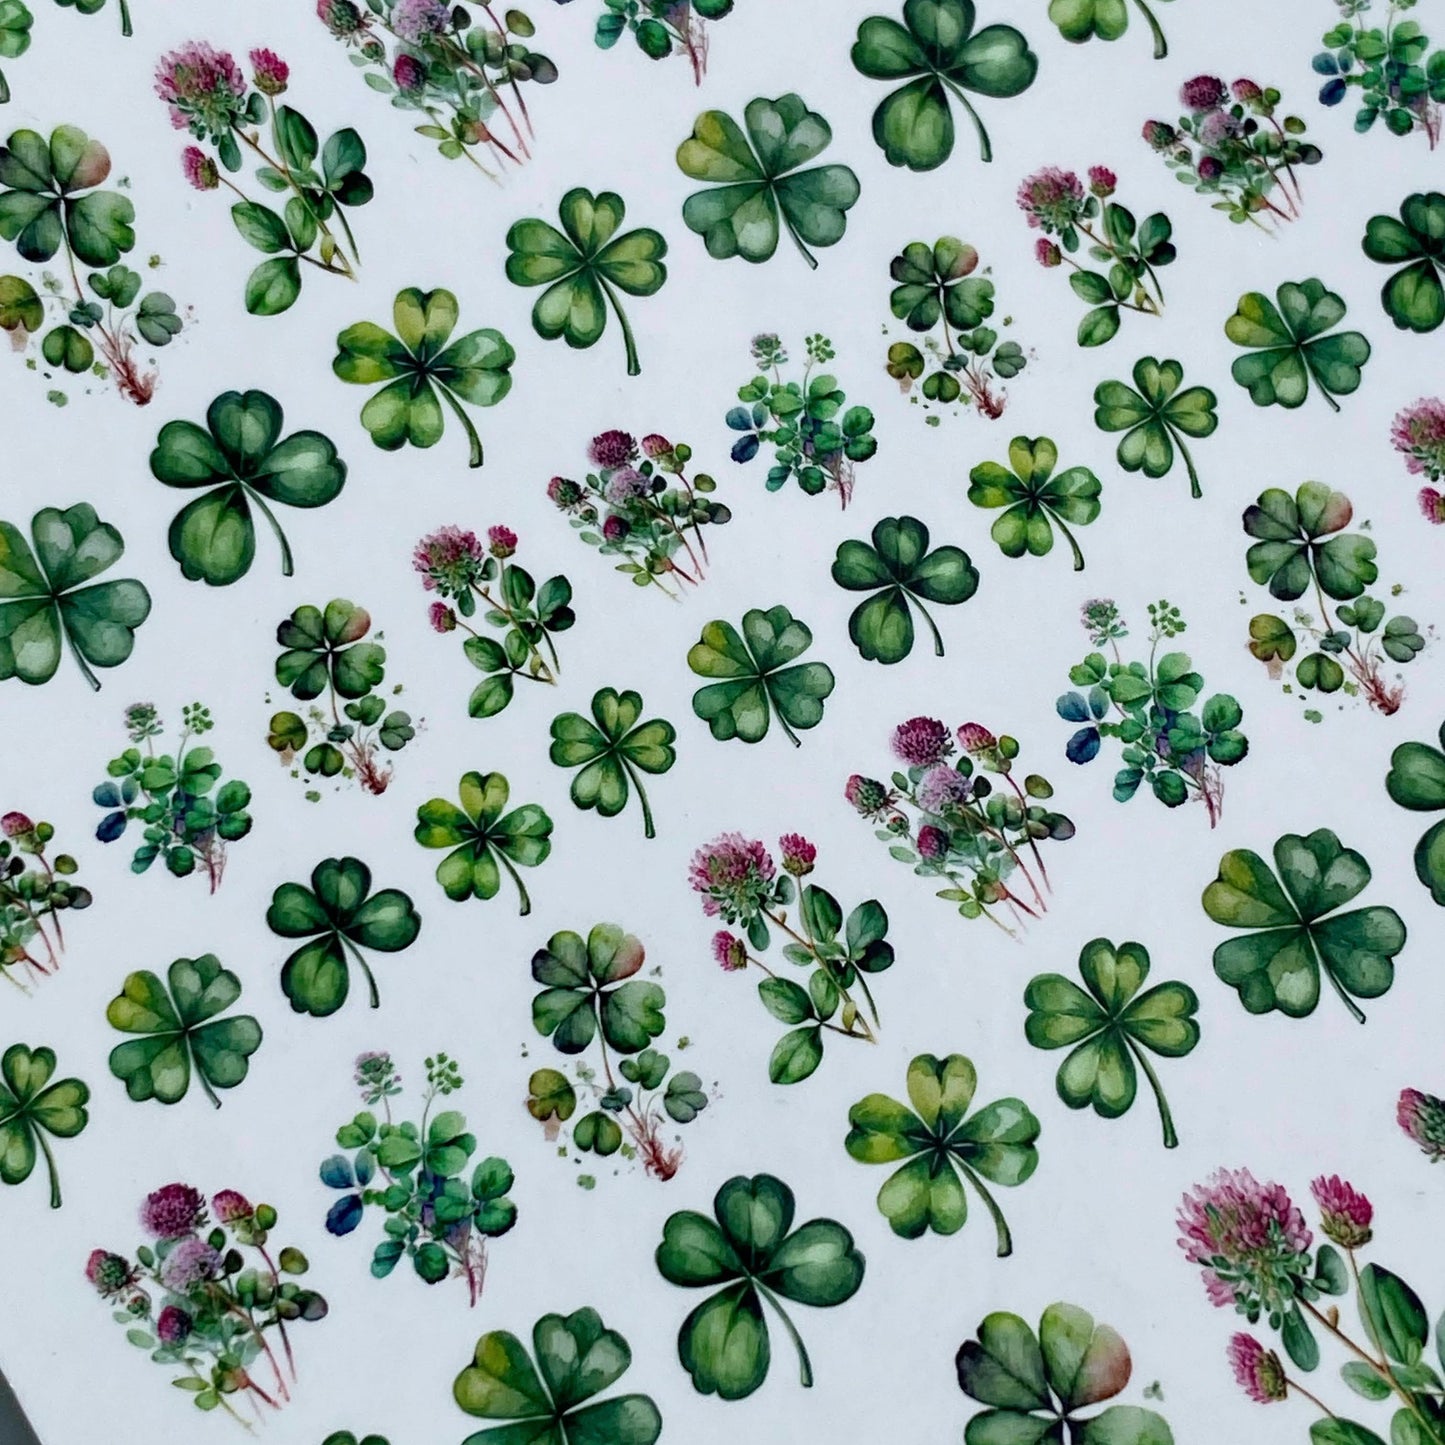 St. Patrick's Day Nail Art - An Irish Garden